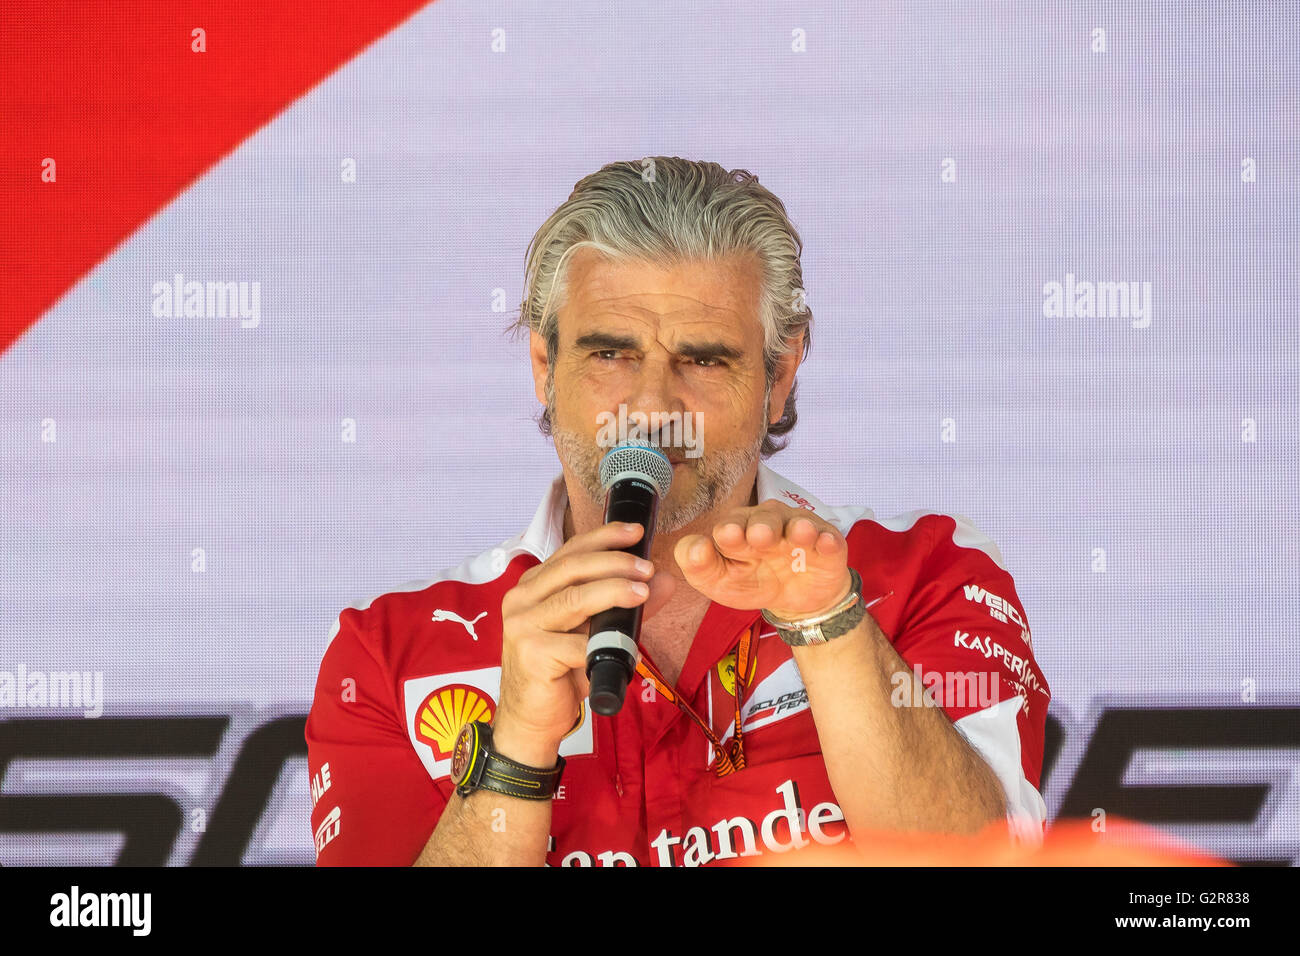 Monaco, France, May 27th 2016: Maurizio Arrivabene, team principal of Ferrari Formula One team, interviewed during talk show Stock Photo